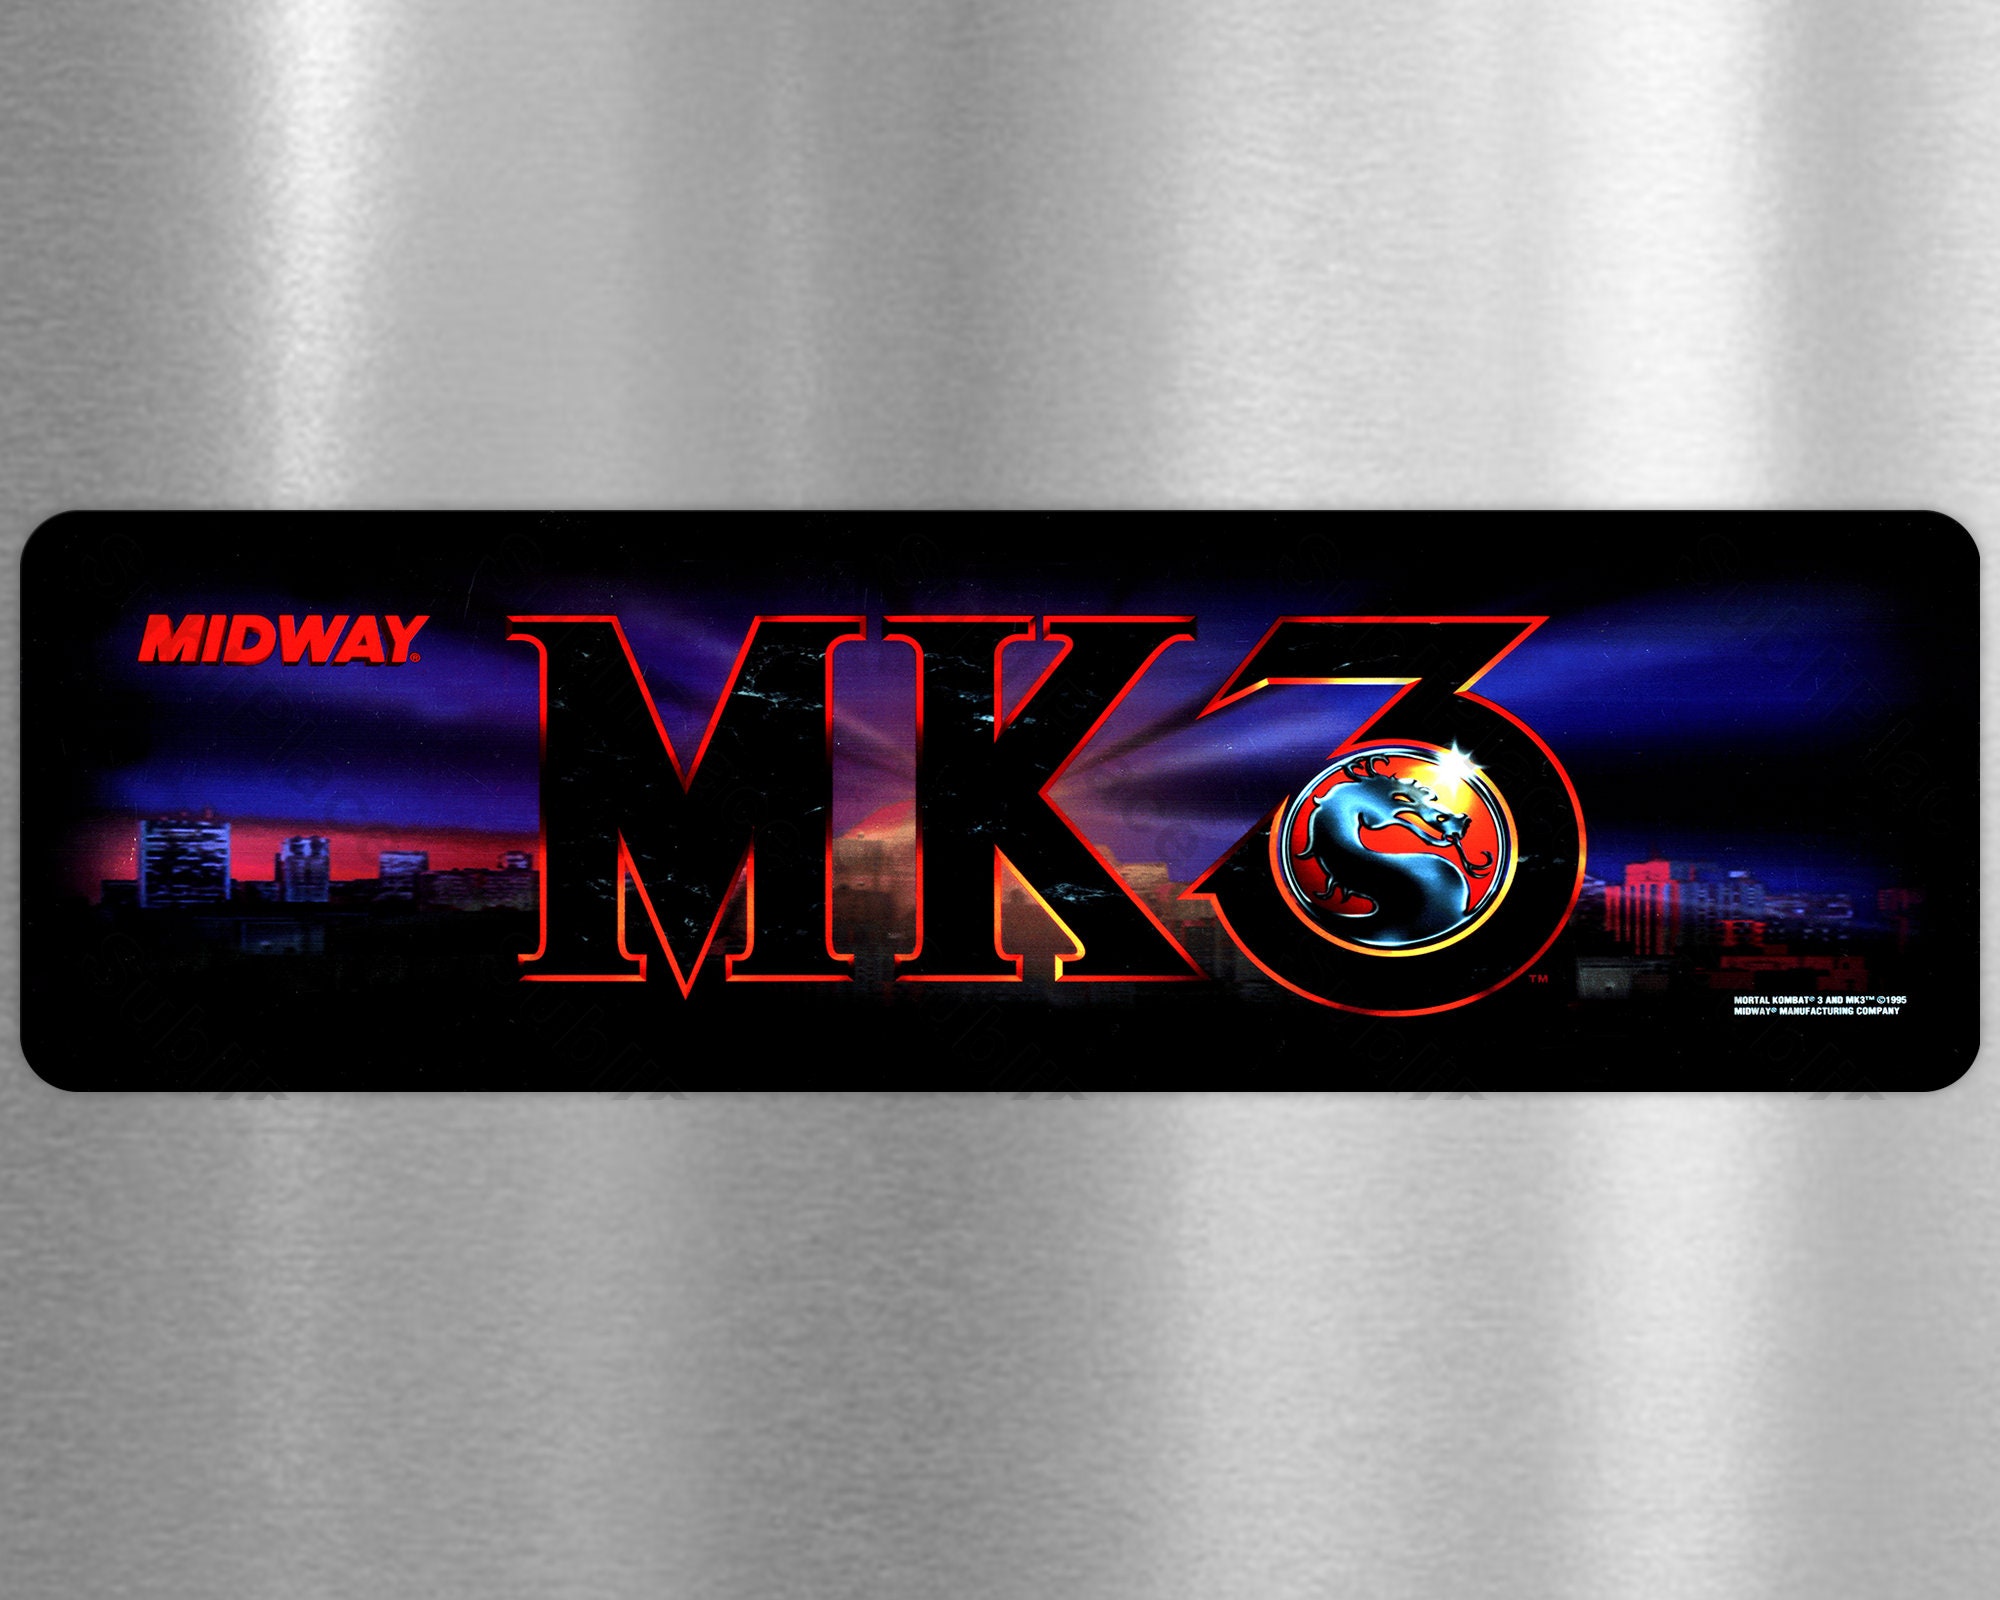 Mortal Kombat 3 Arcade Marquee - 26 x 8 - Arcade Marquee Dot Com